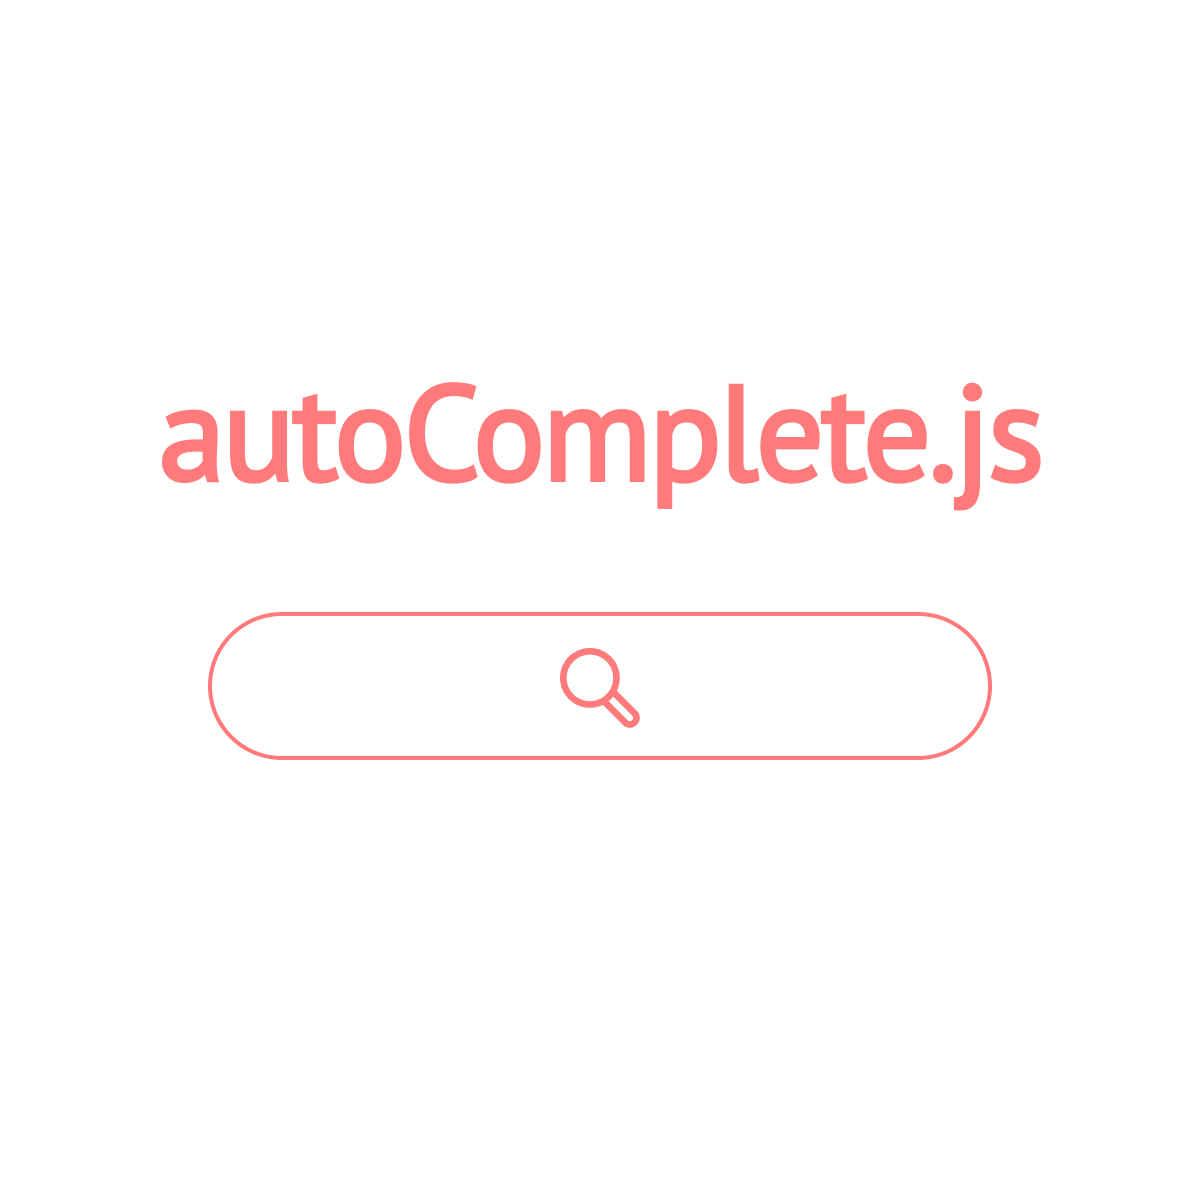 autoComplete.js